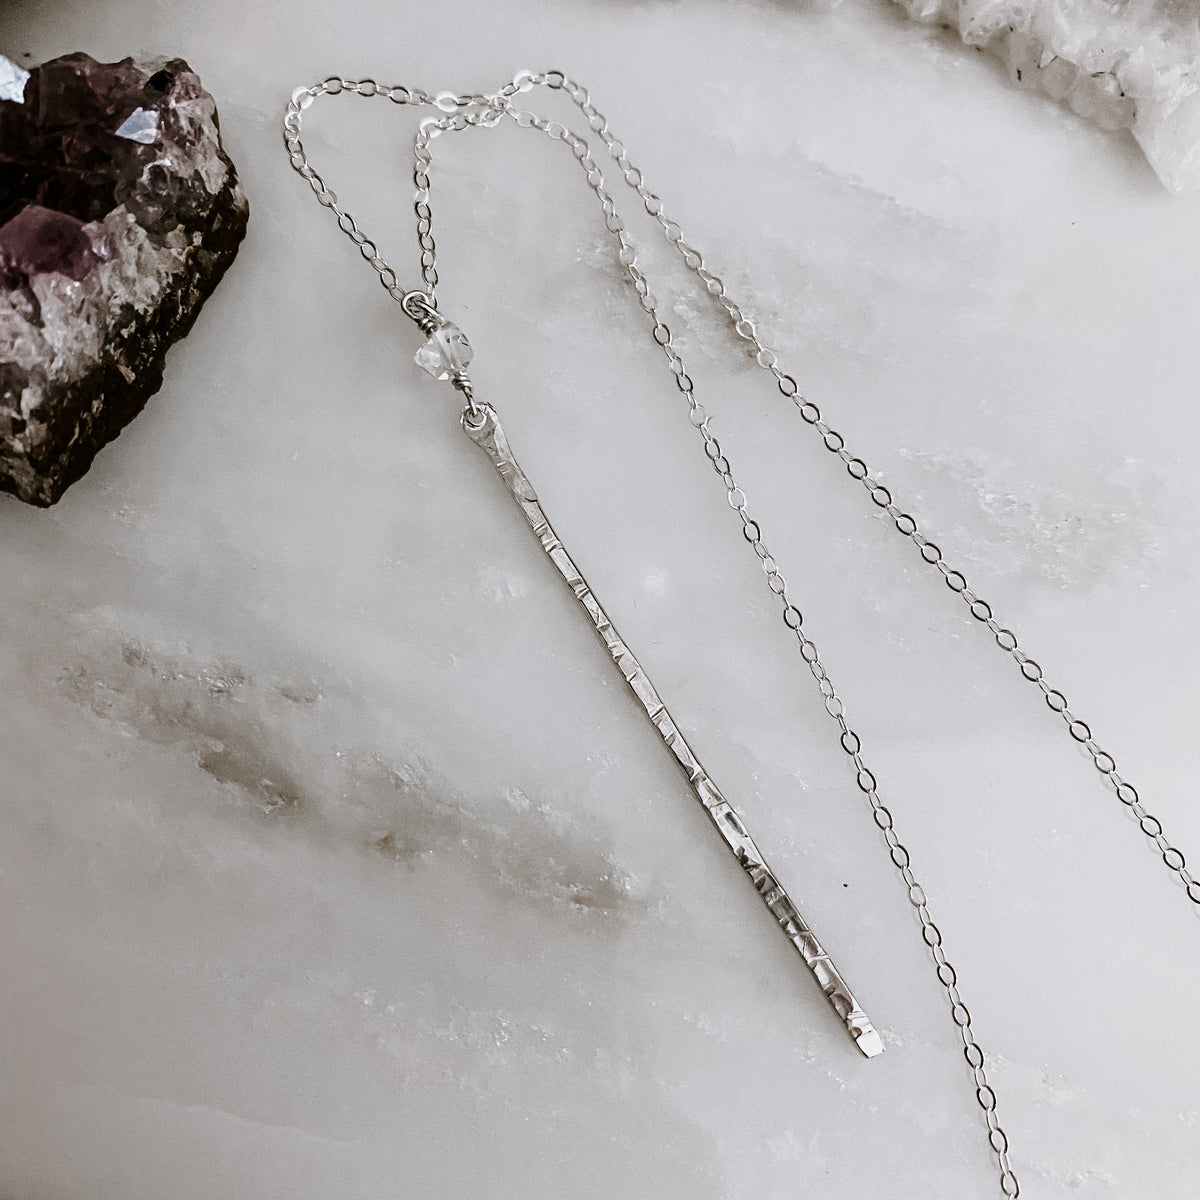 Wanderer's Stick Necklace with Herkimer Diamond